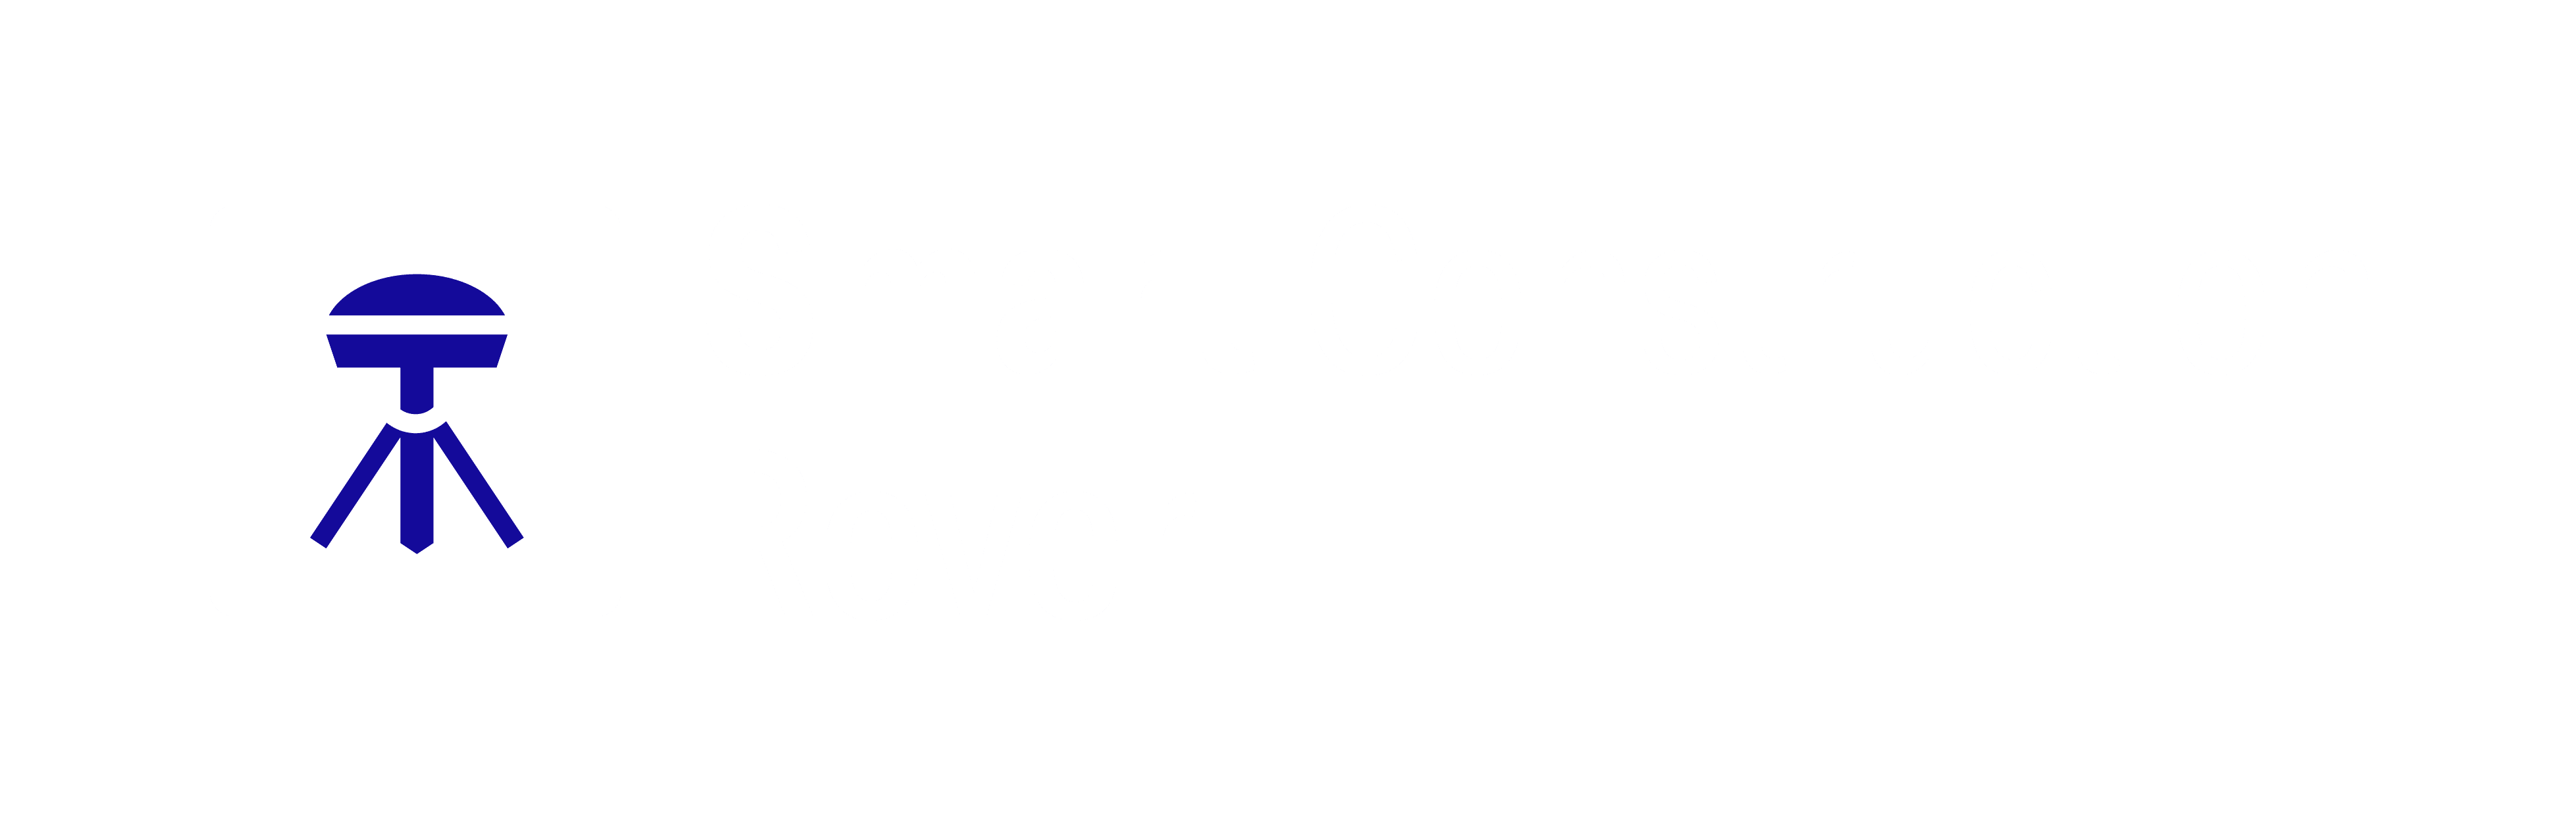 Smart Construction Rover